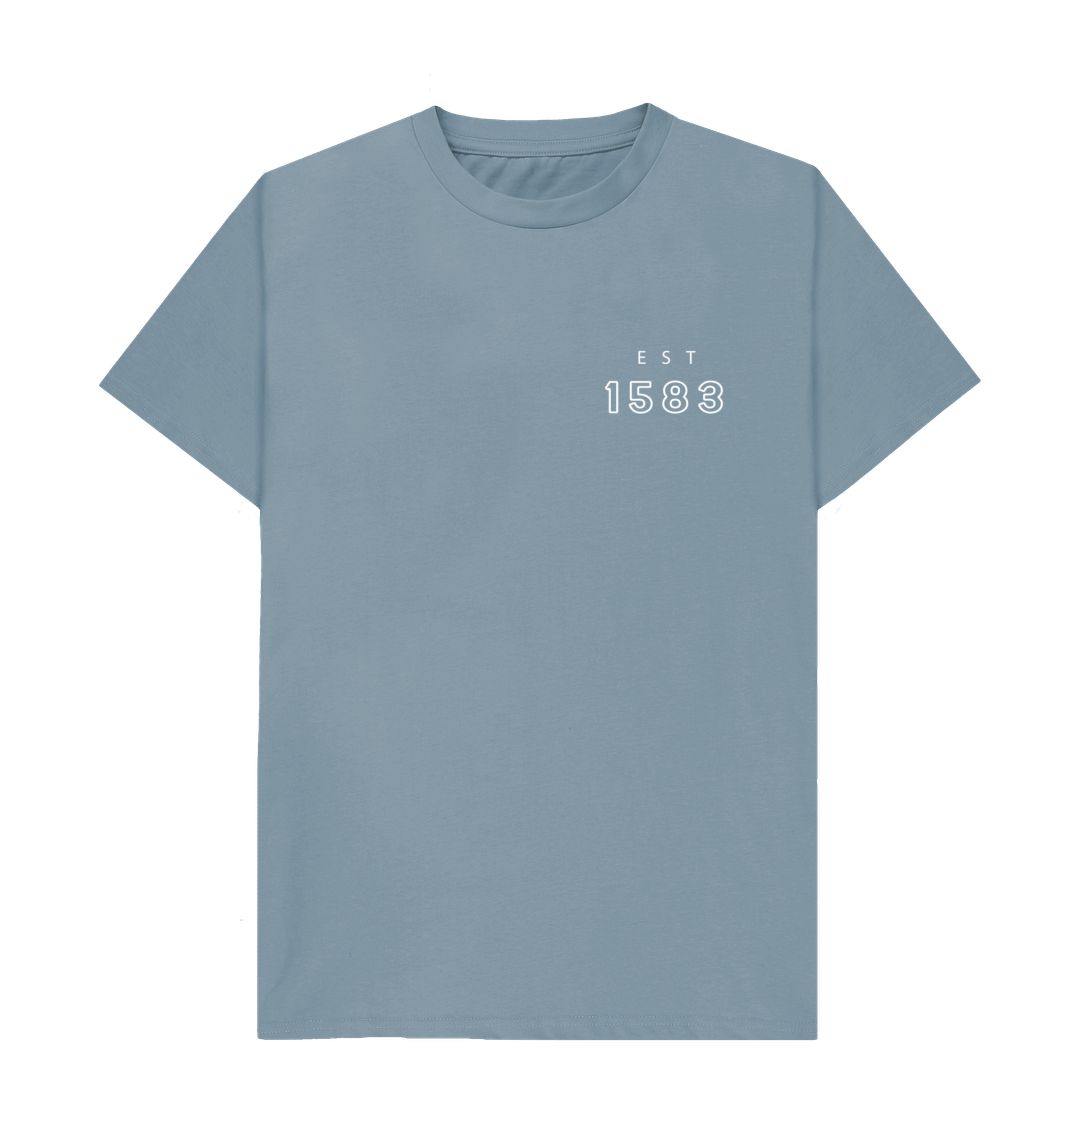 Stone Blue Teviot Row House Coordinates Design T-Shirt